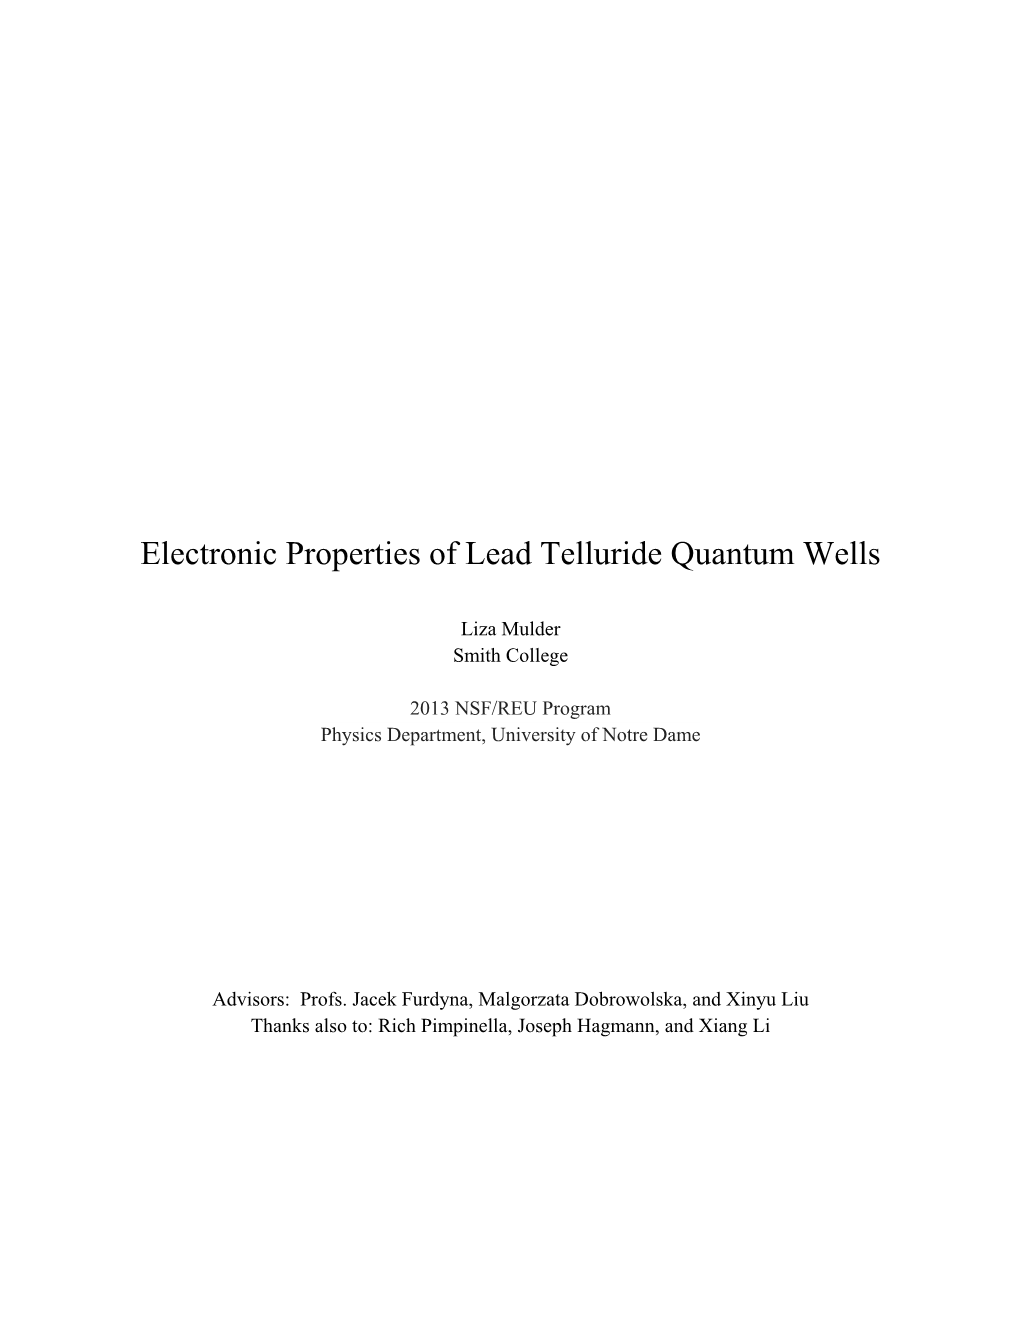 Electronic Properties of Lead Telluride Quantum Wells